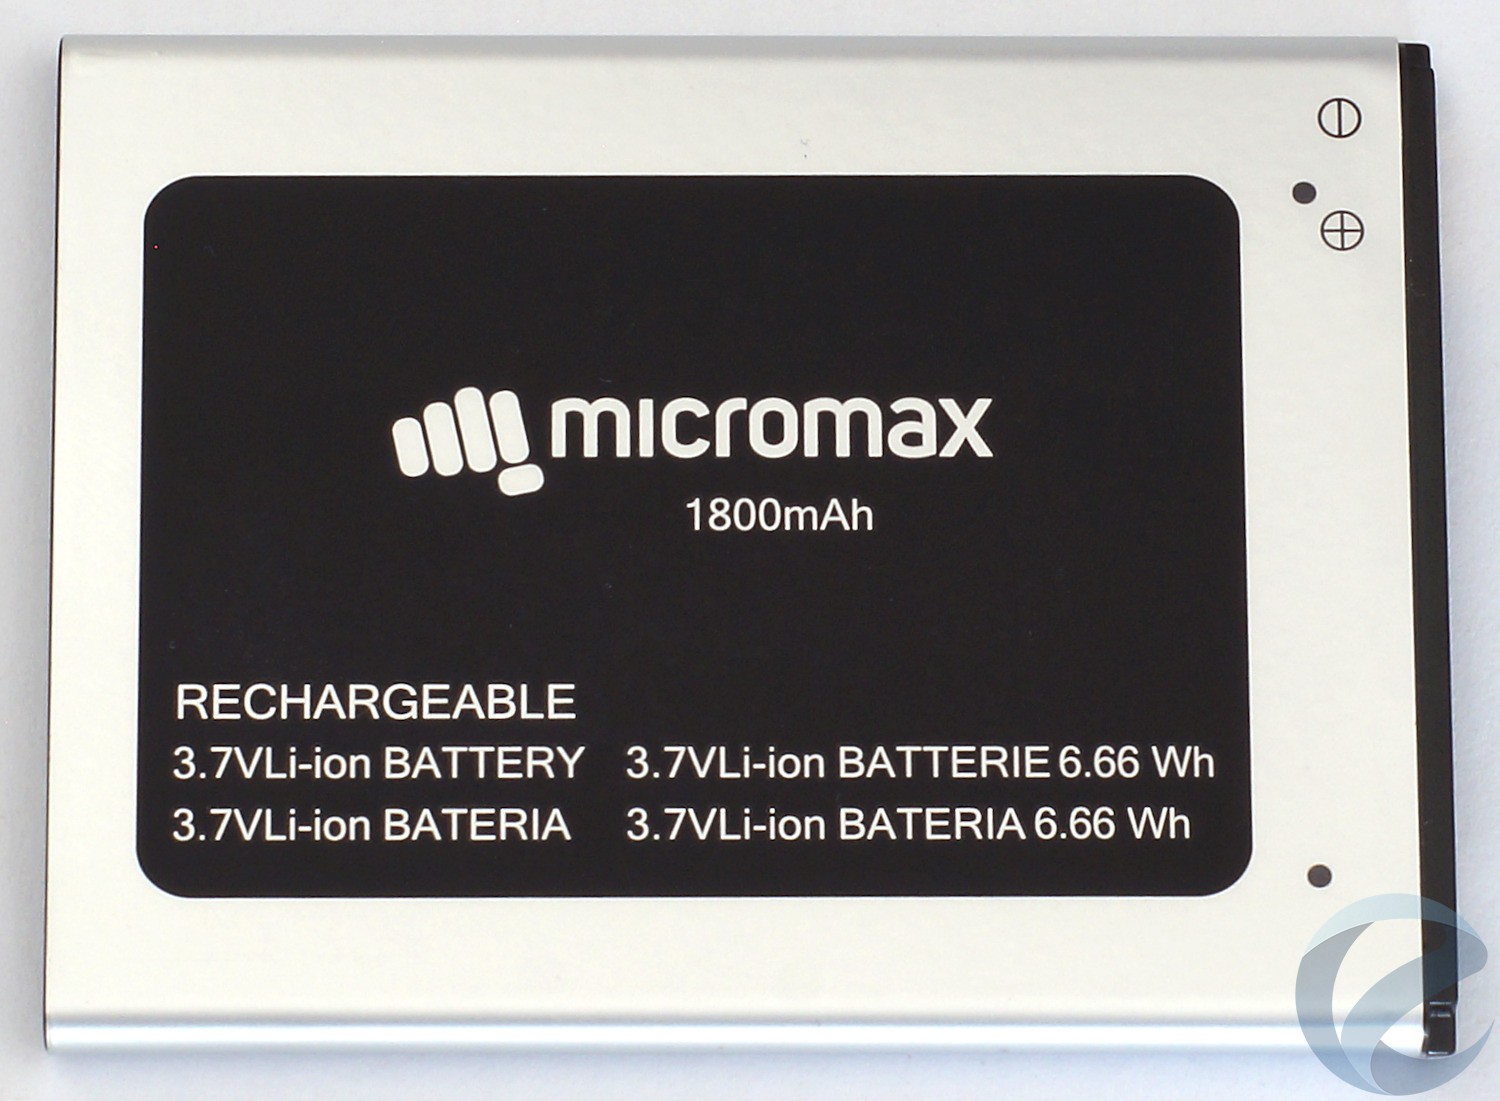 Внешний вид и особенности смартфона Micromax Q4101 BOLT Warrior 1 Plus 